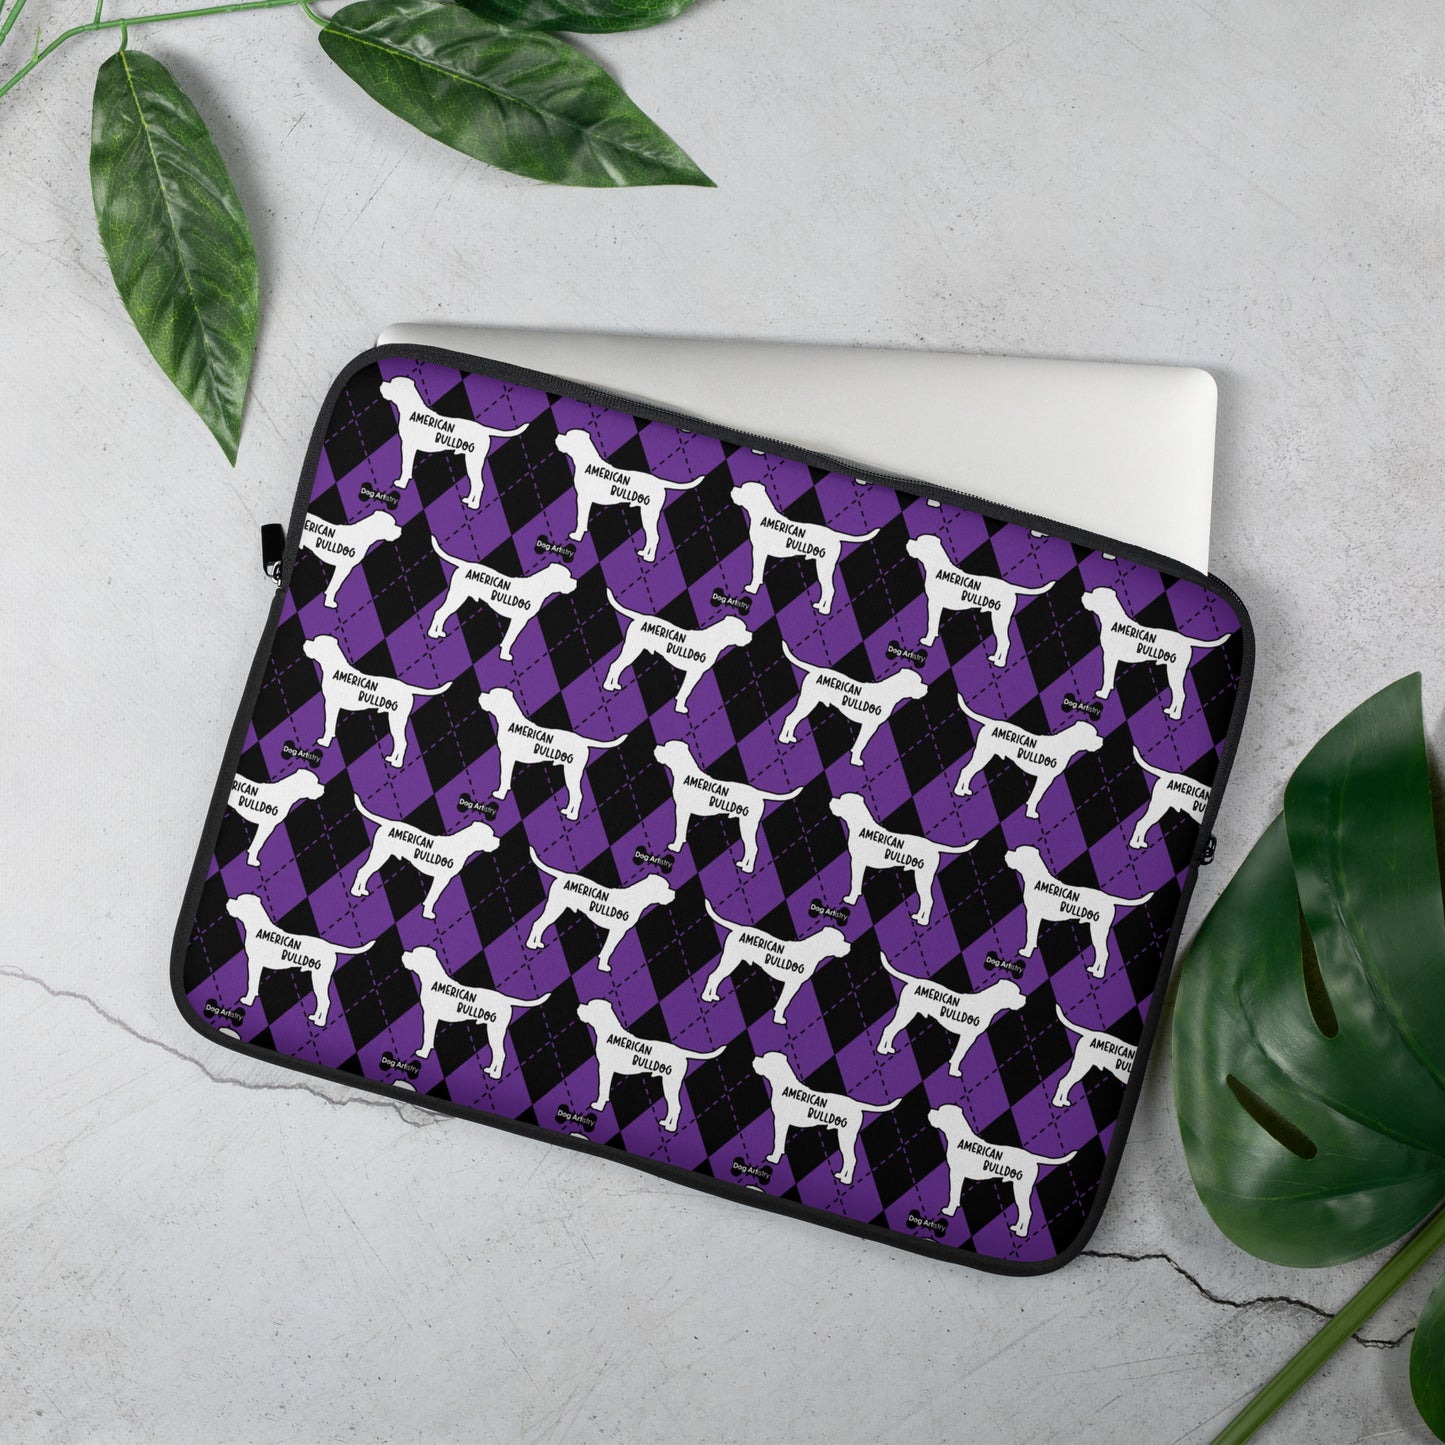 American Bulldog purple and black argyle laptop sleeve by Dog Artistry